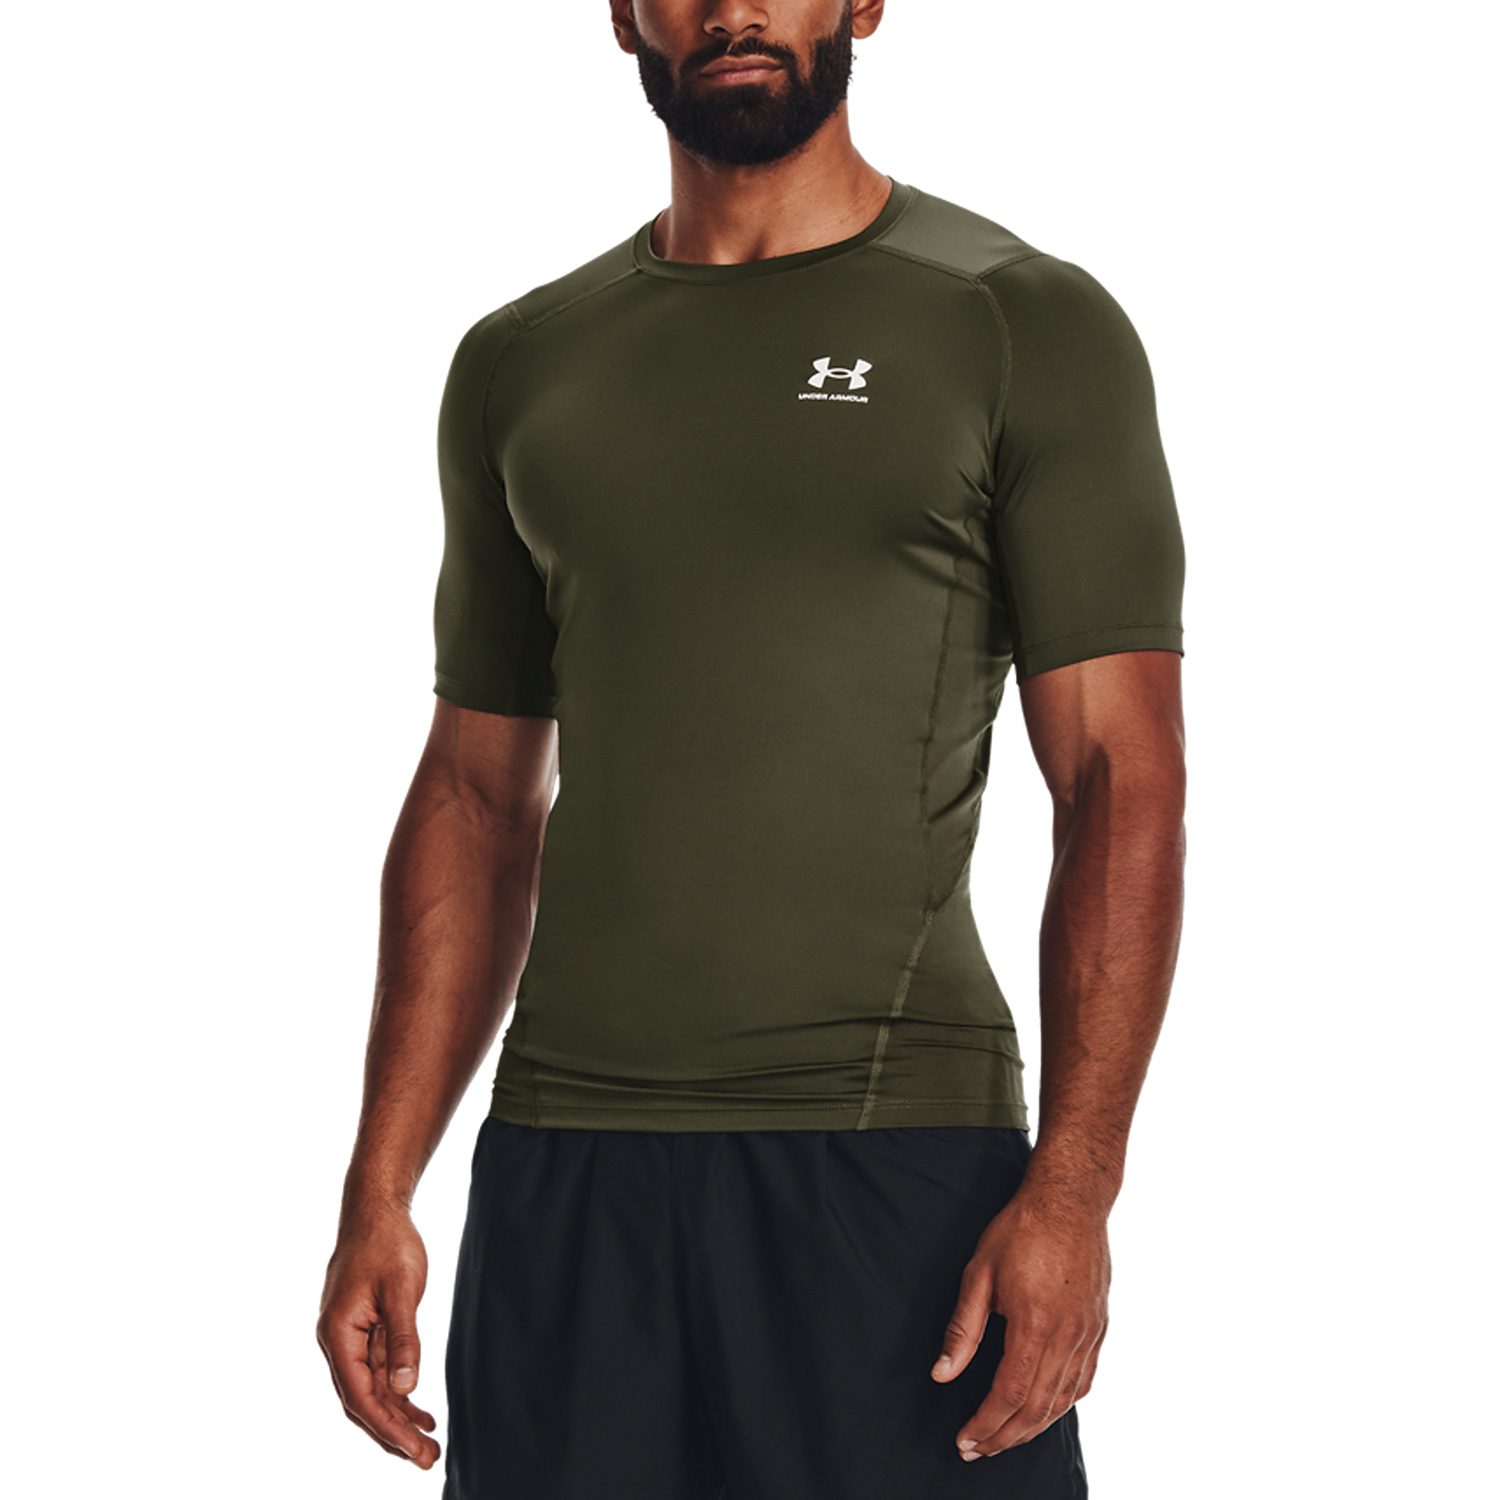 Under Armour HeatGear Men's Training T-Shirt - Marine Od Green